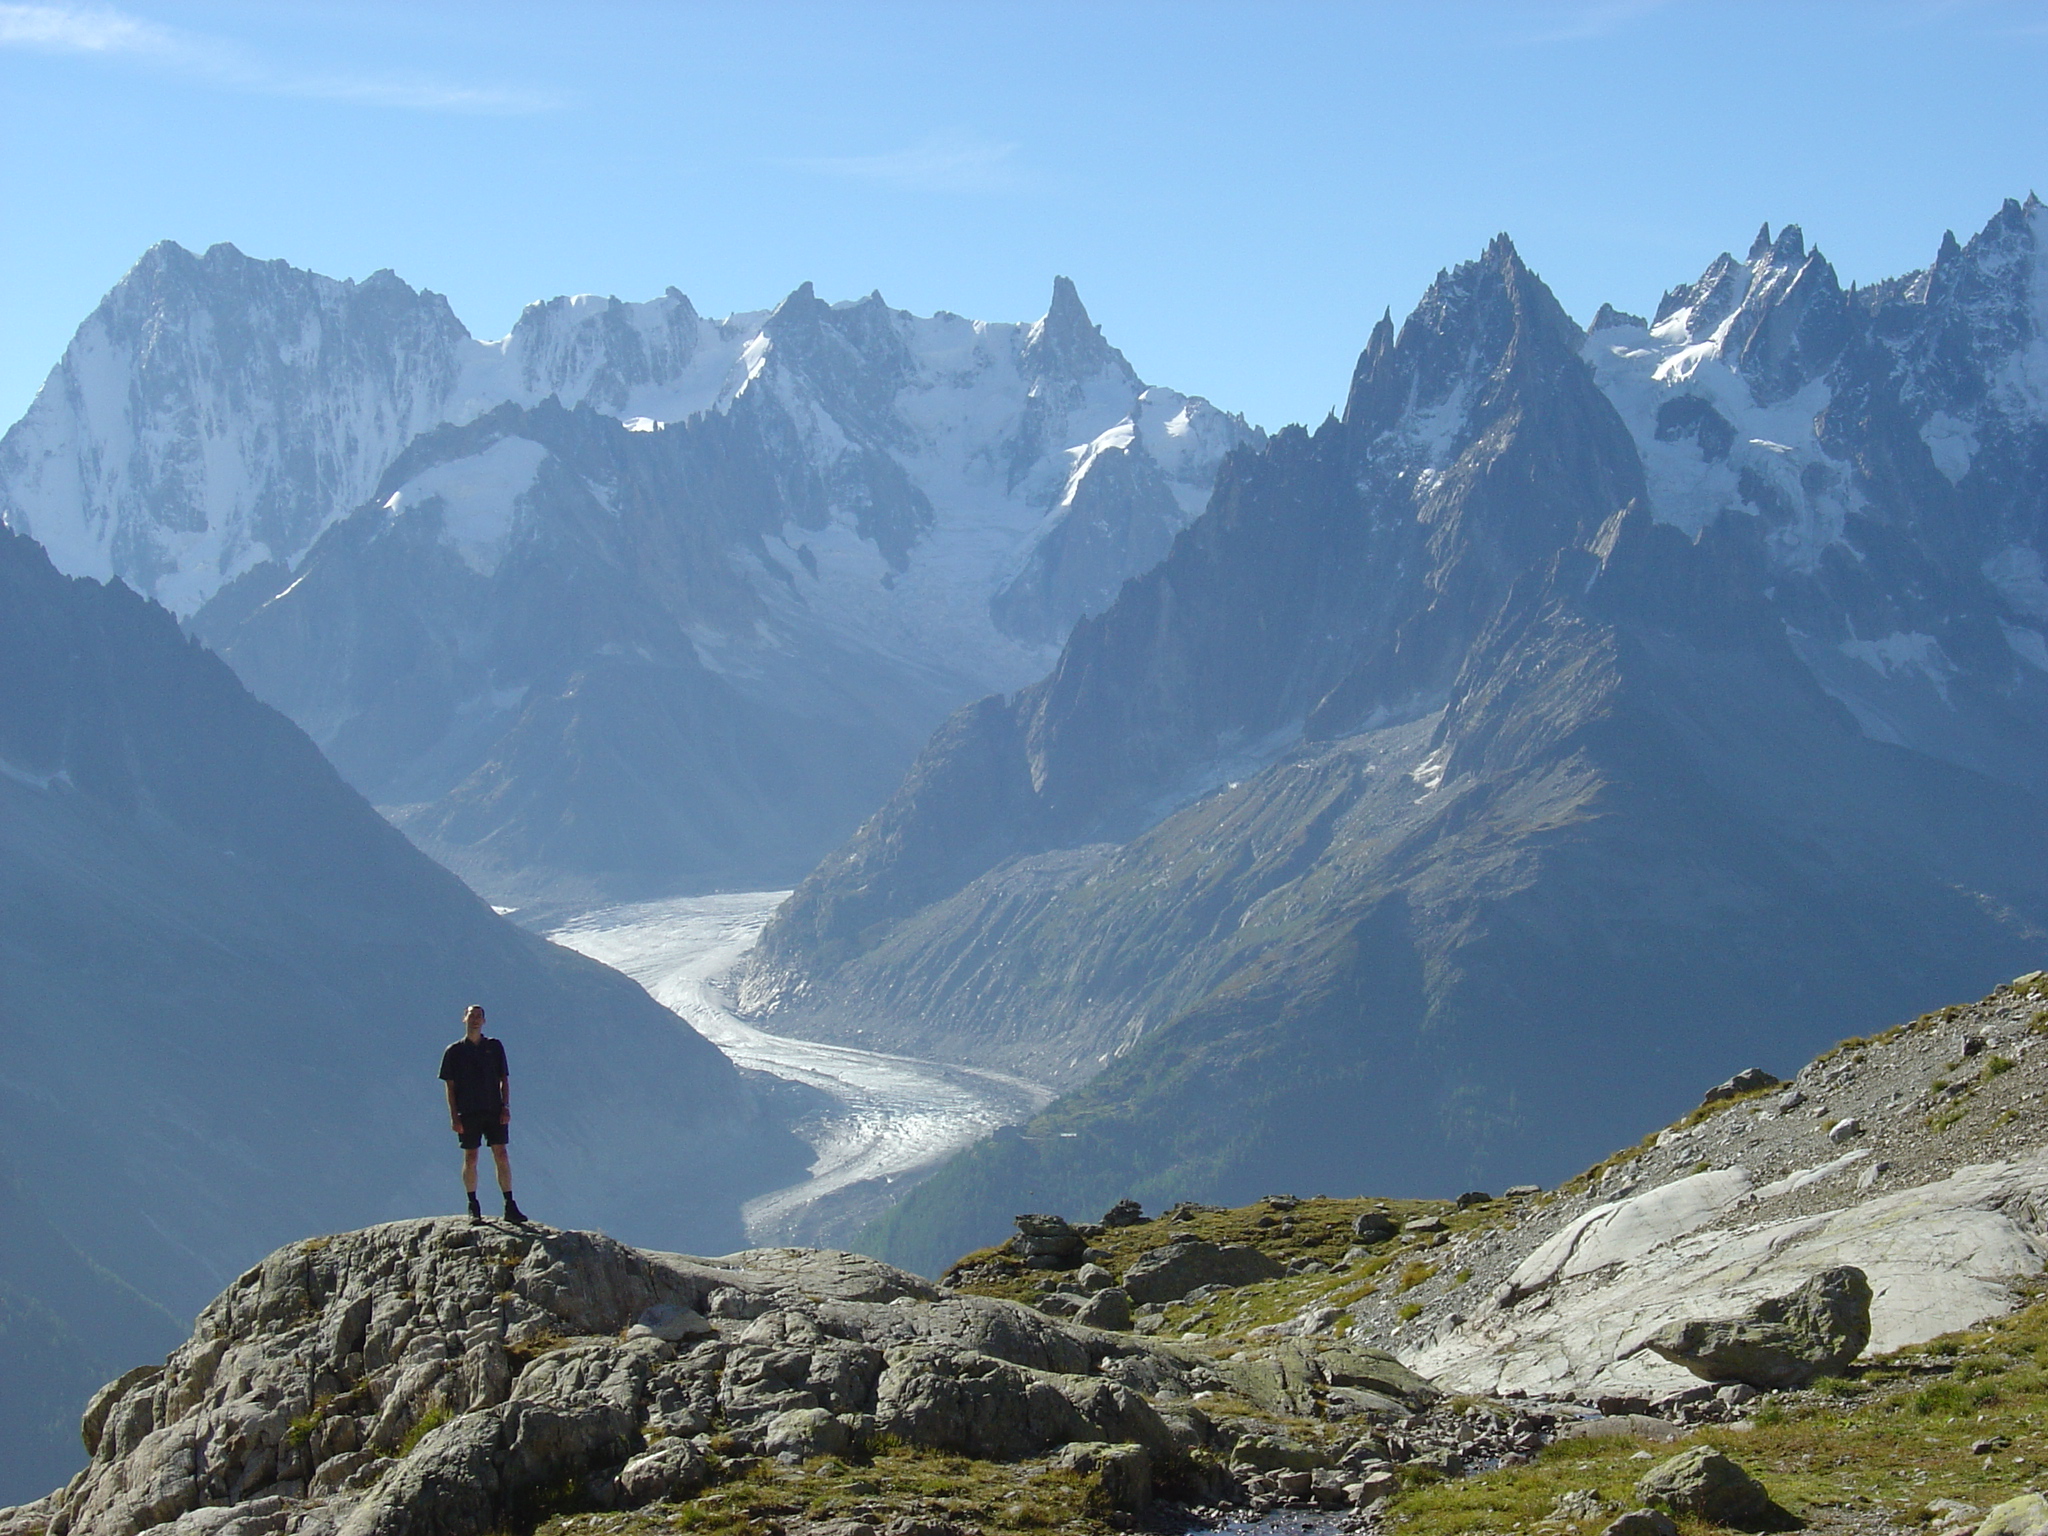 Trek The Tour du Mont Blanc (TMB) 2020/21 | Adventure Alternative